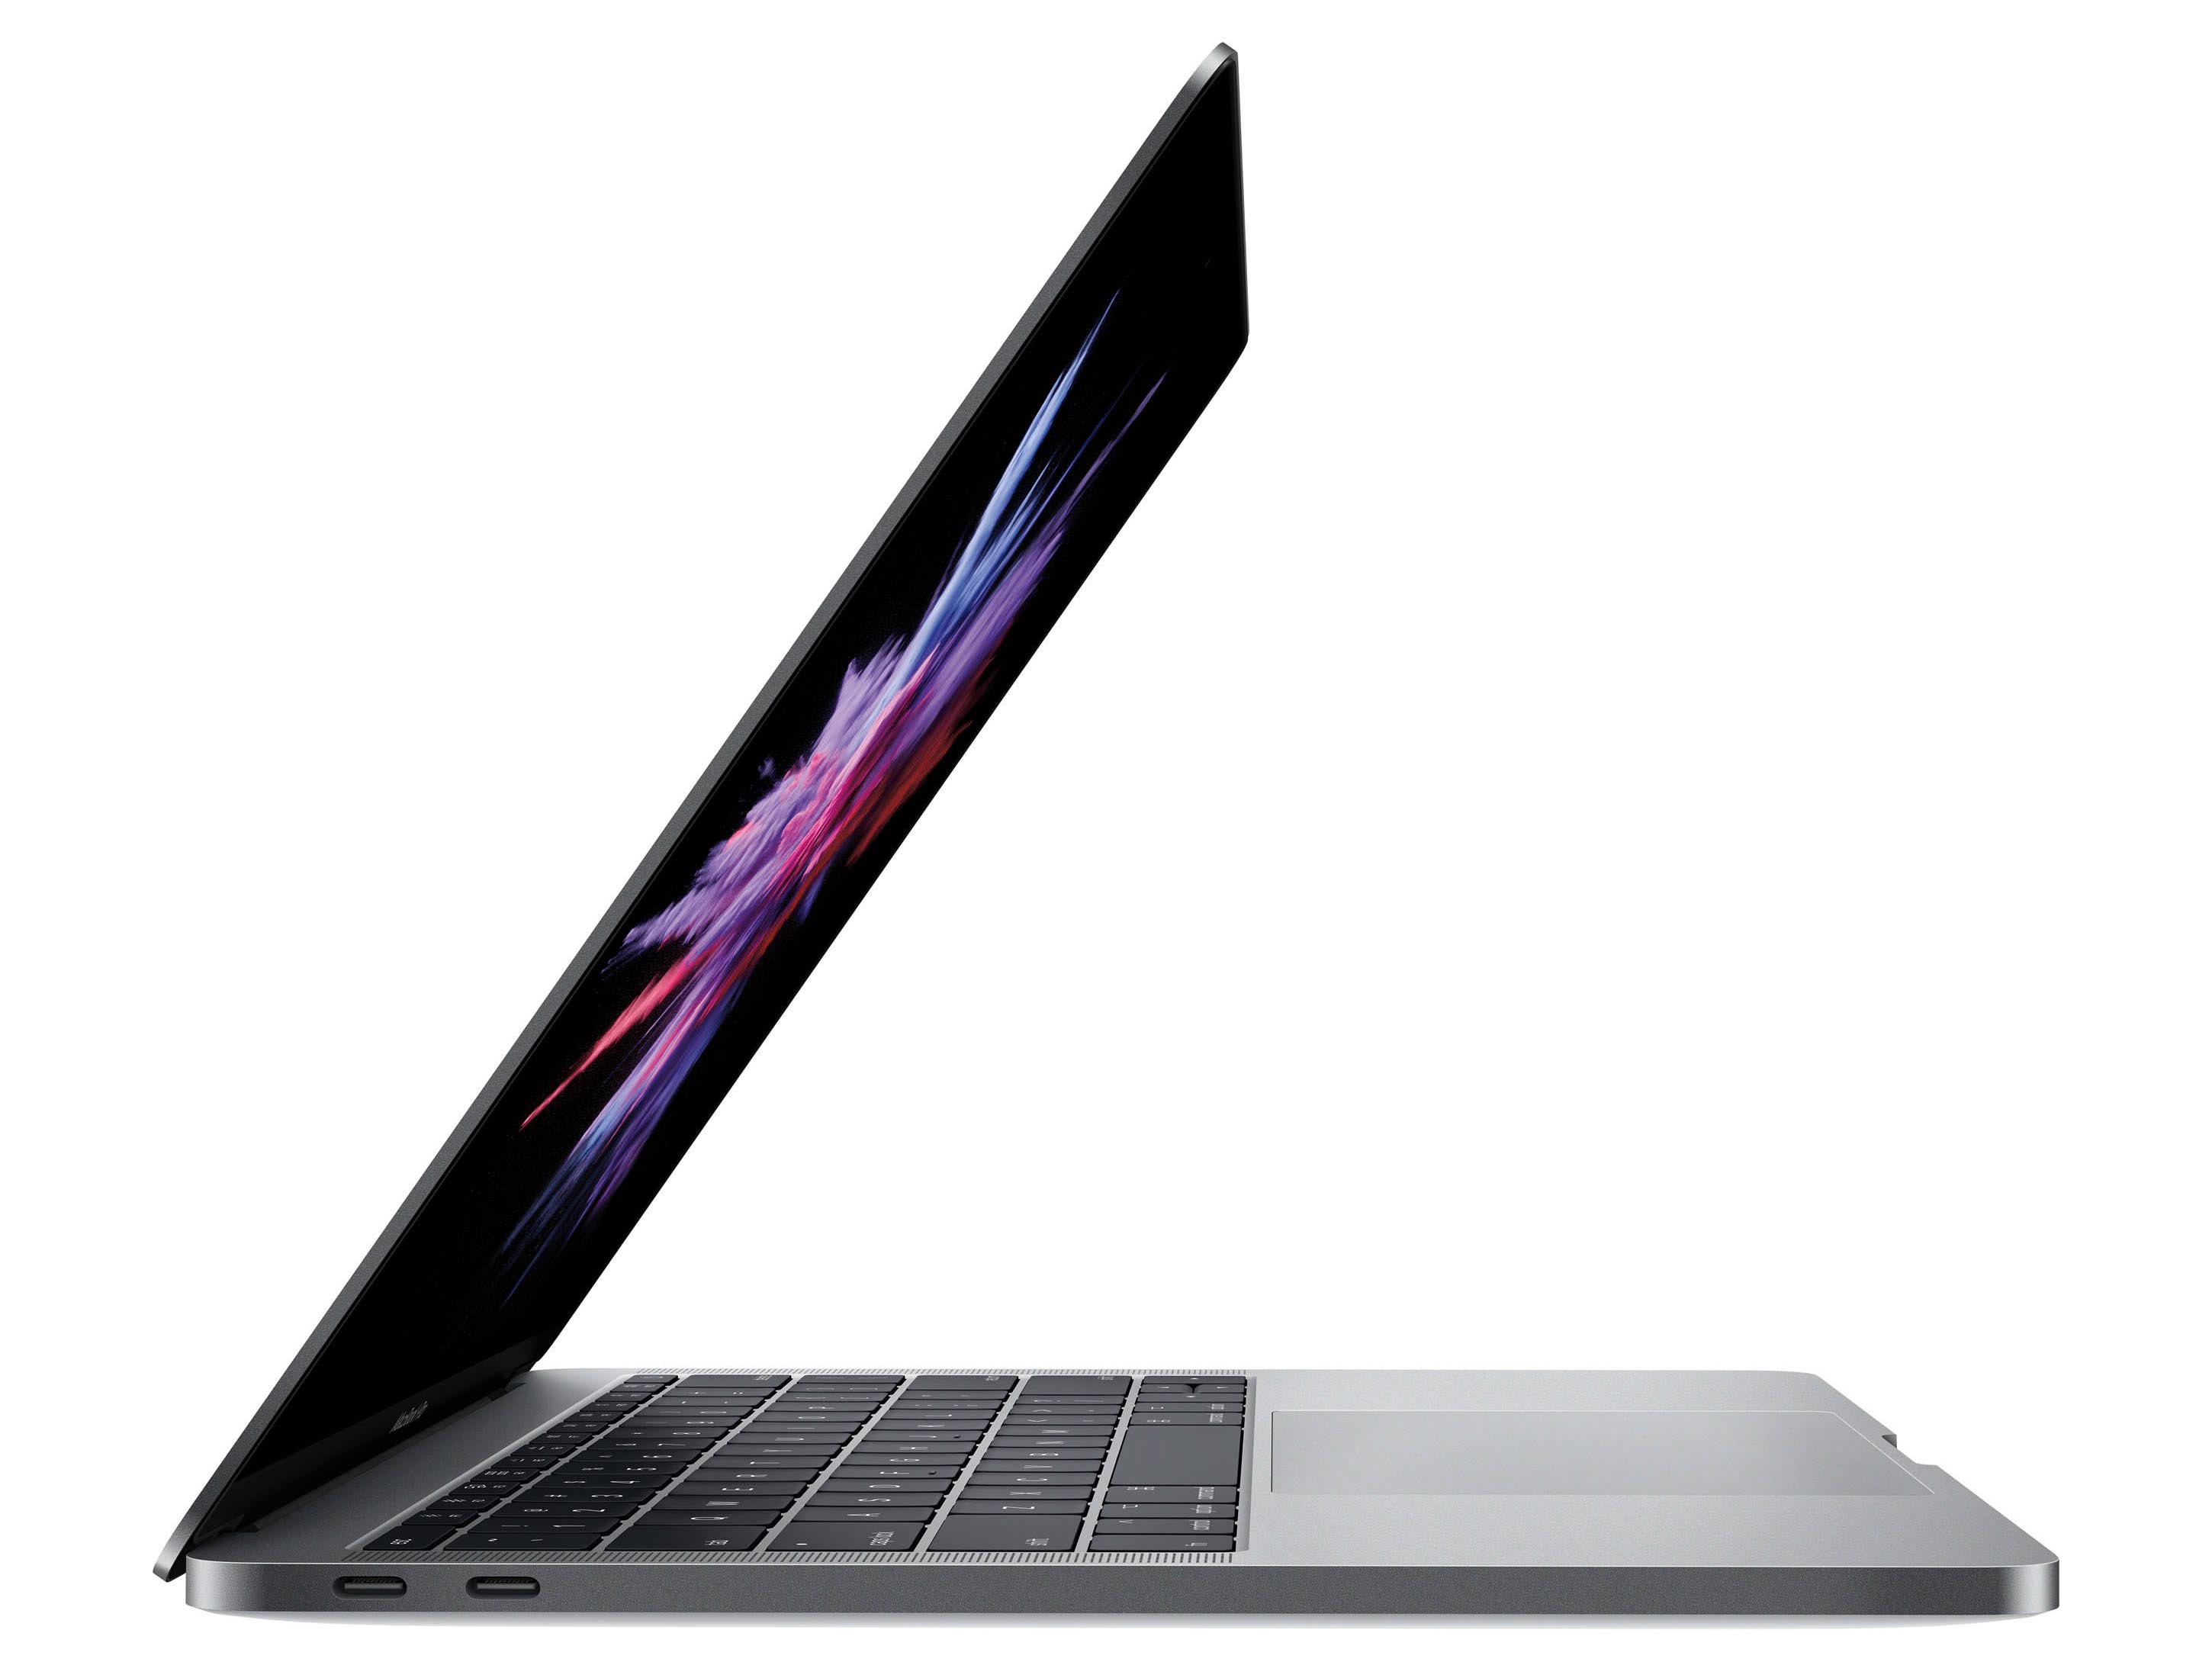 macbook air 13.3 inch refurbished